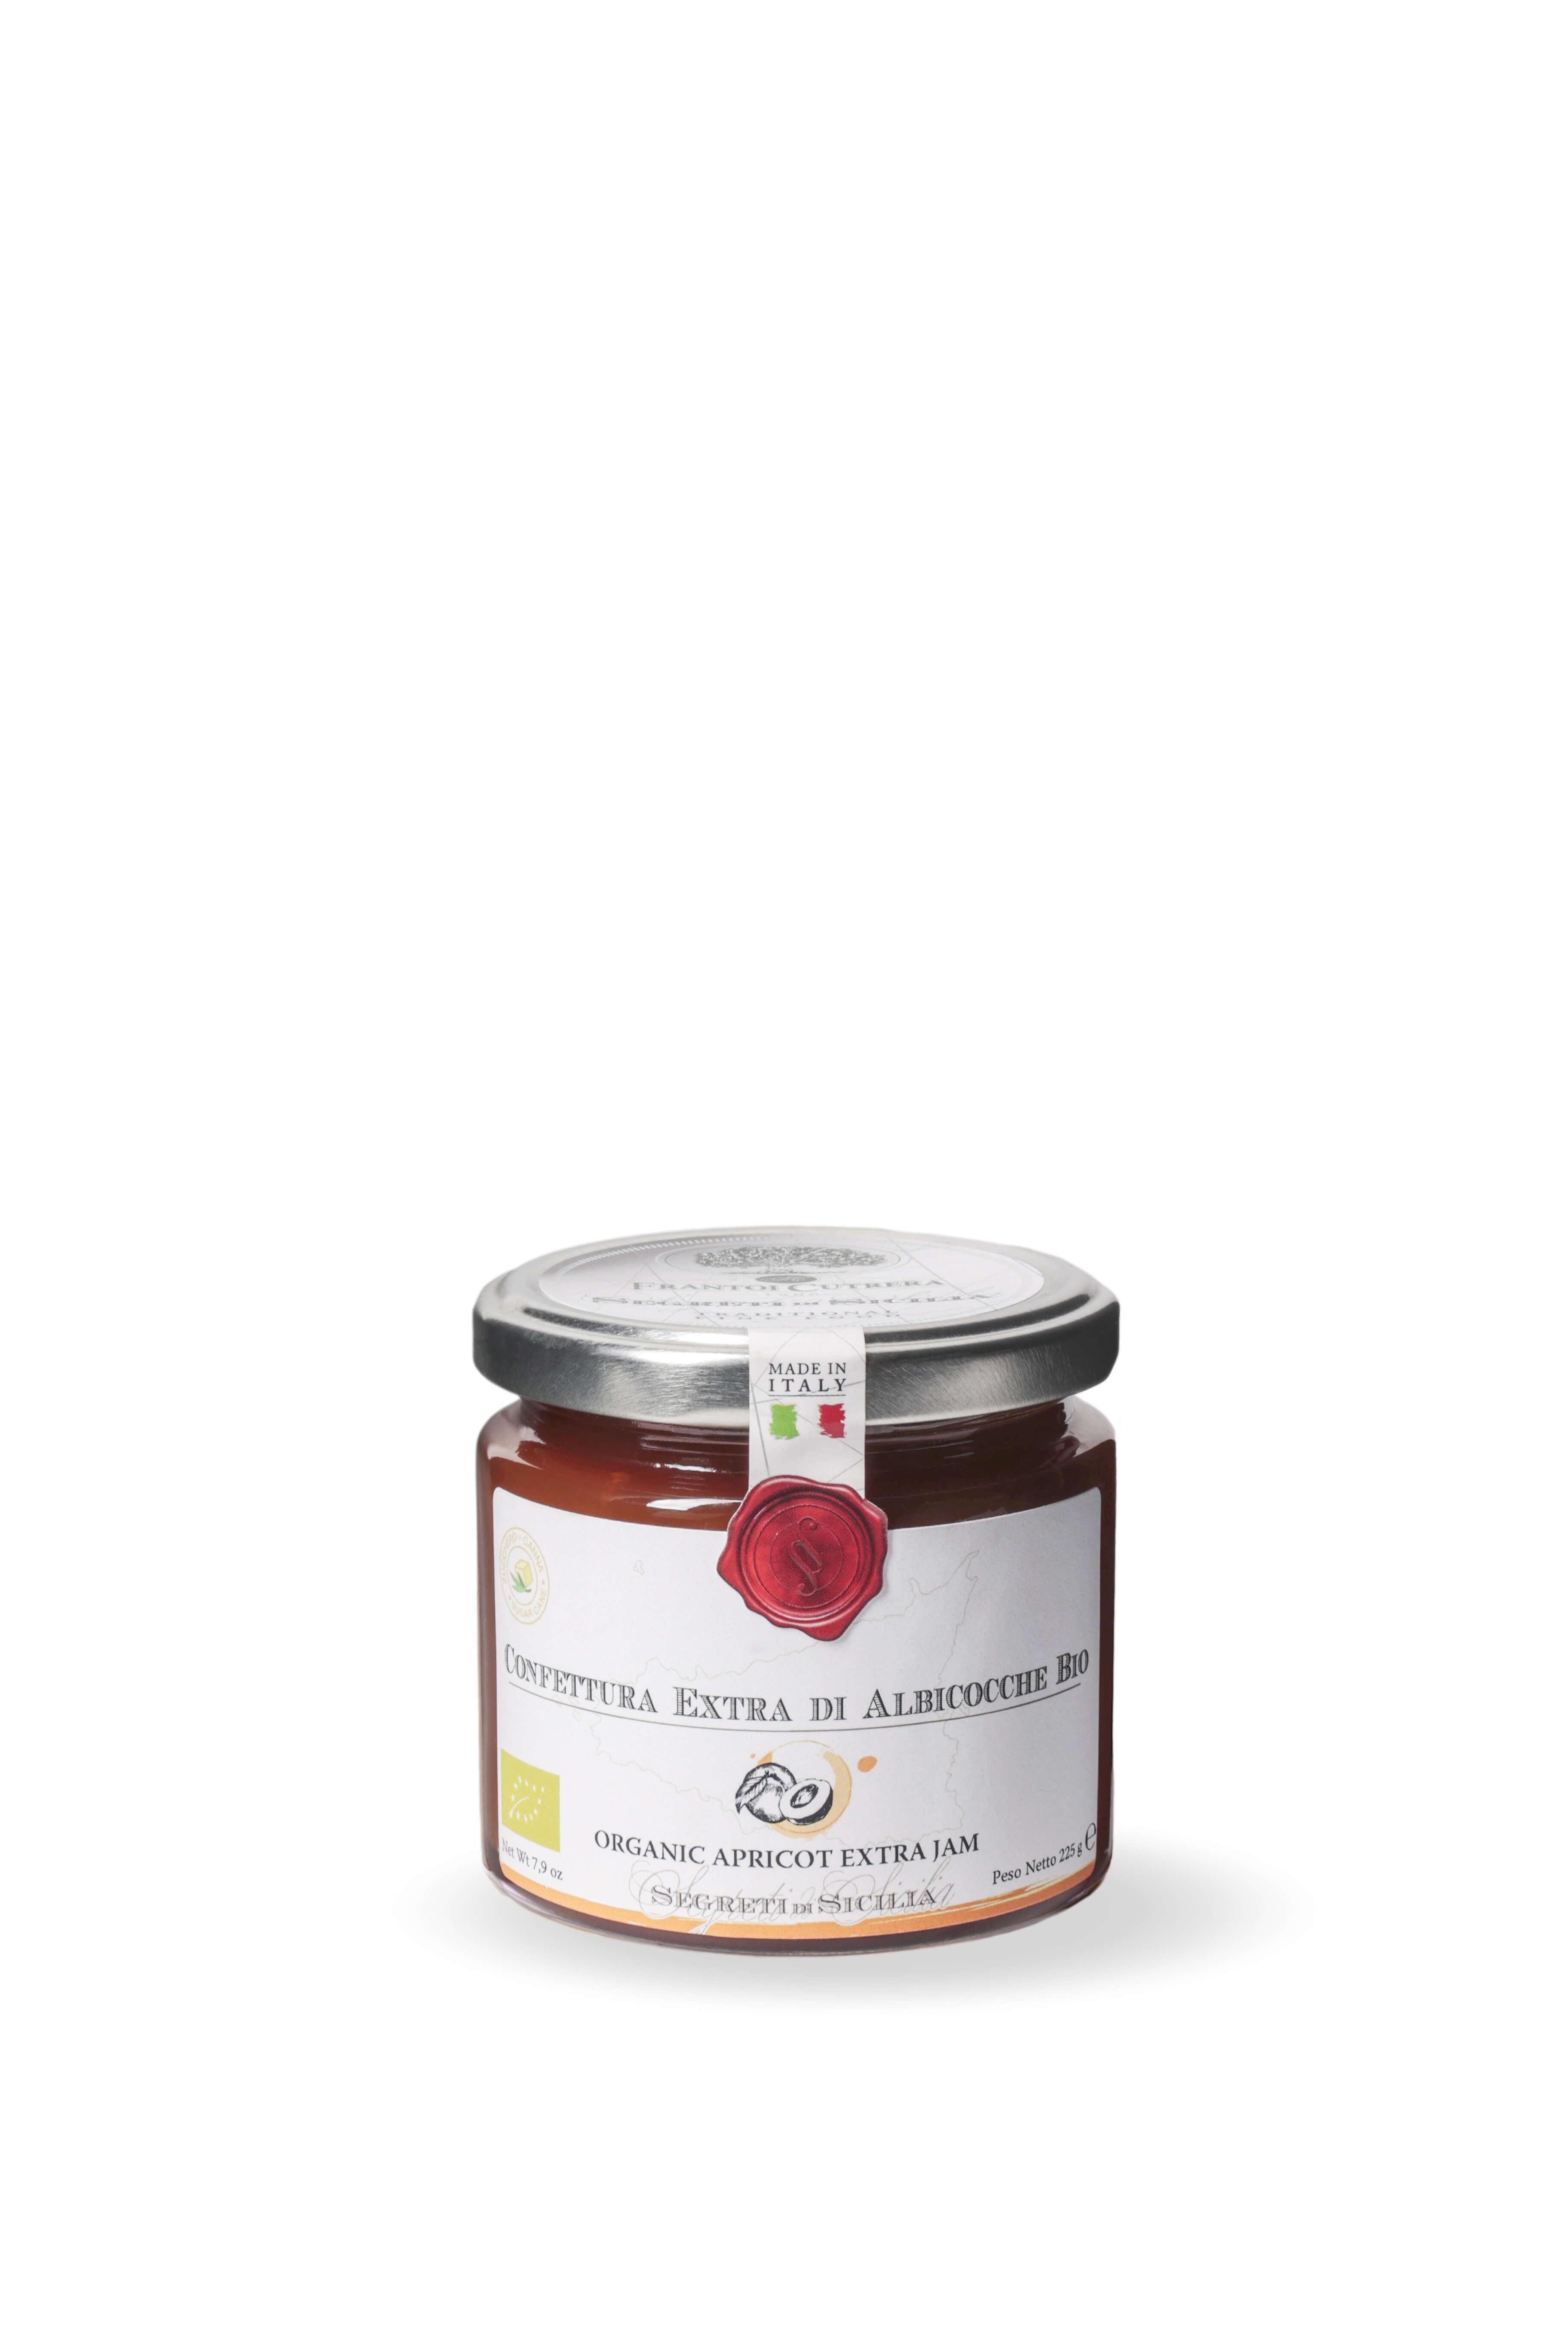 ORGANIC apricot extra jam – Secrets of Sicily